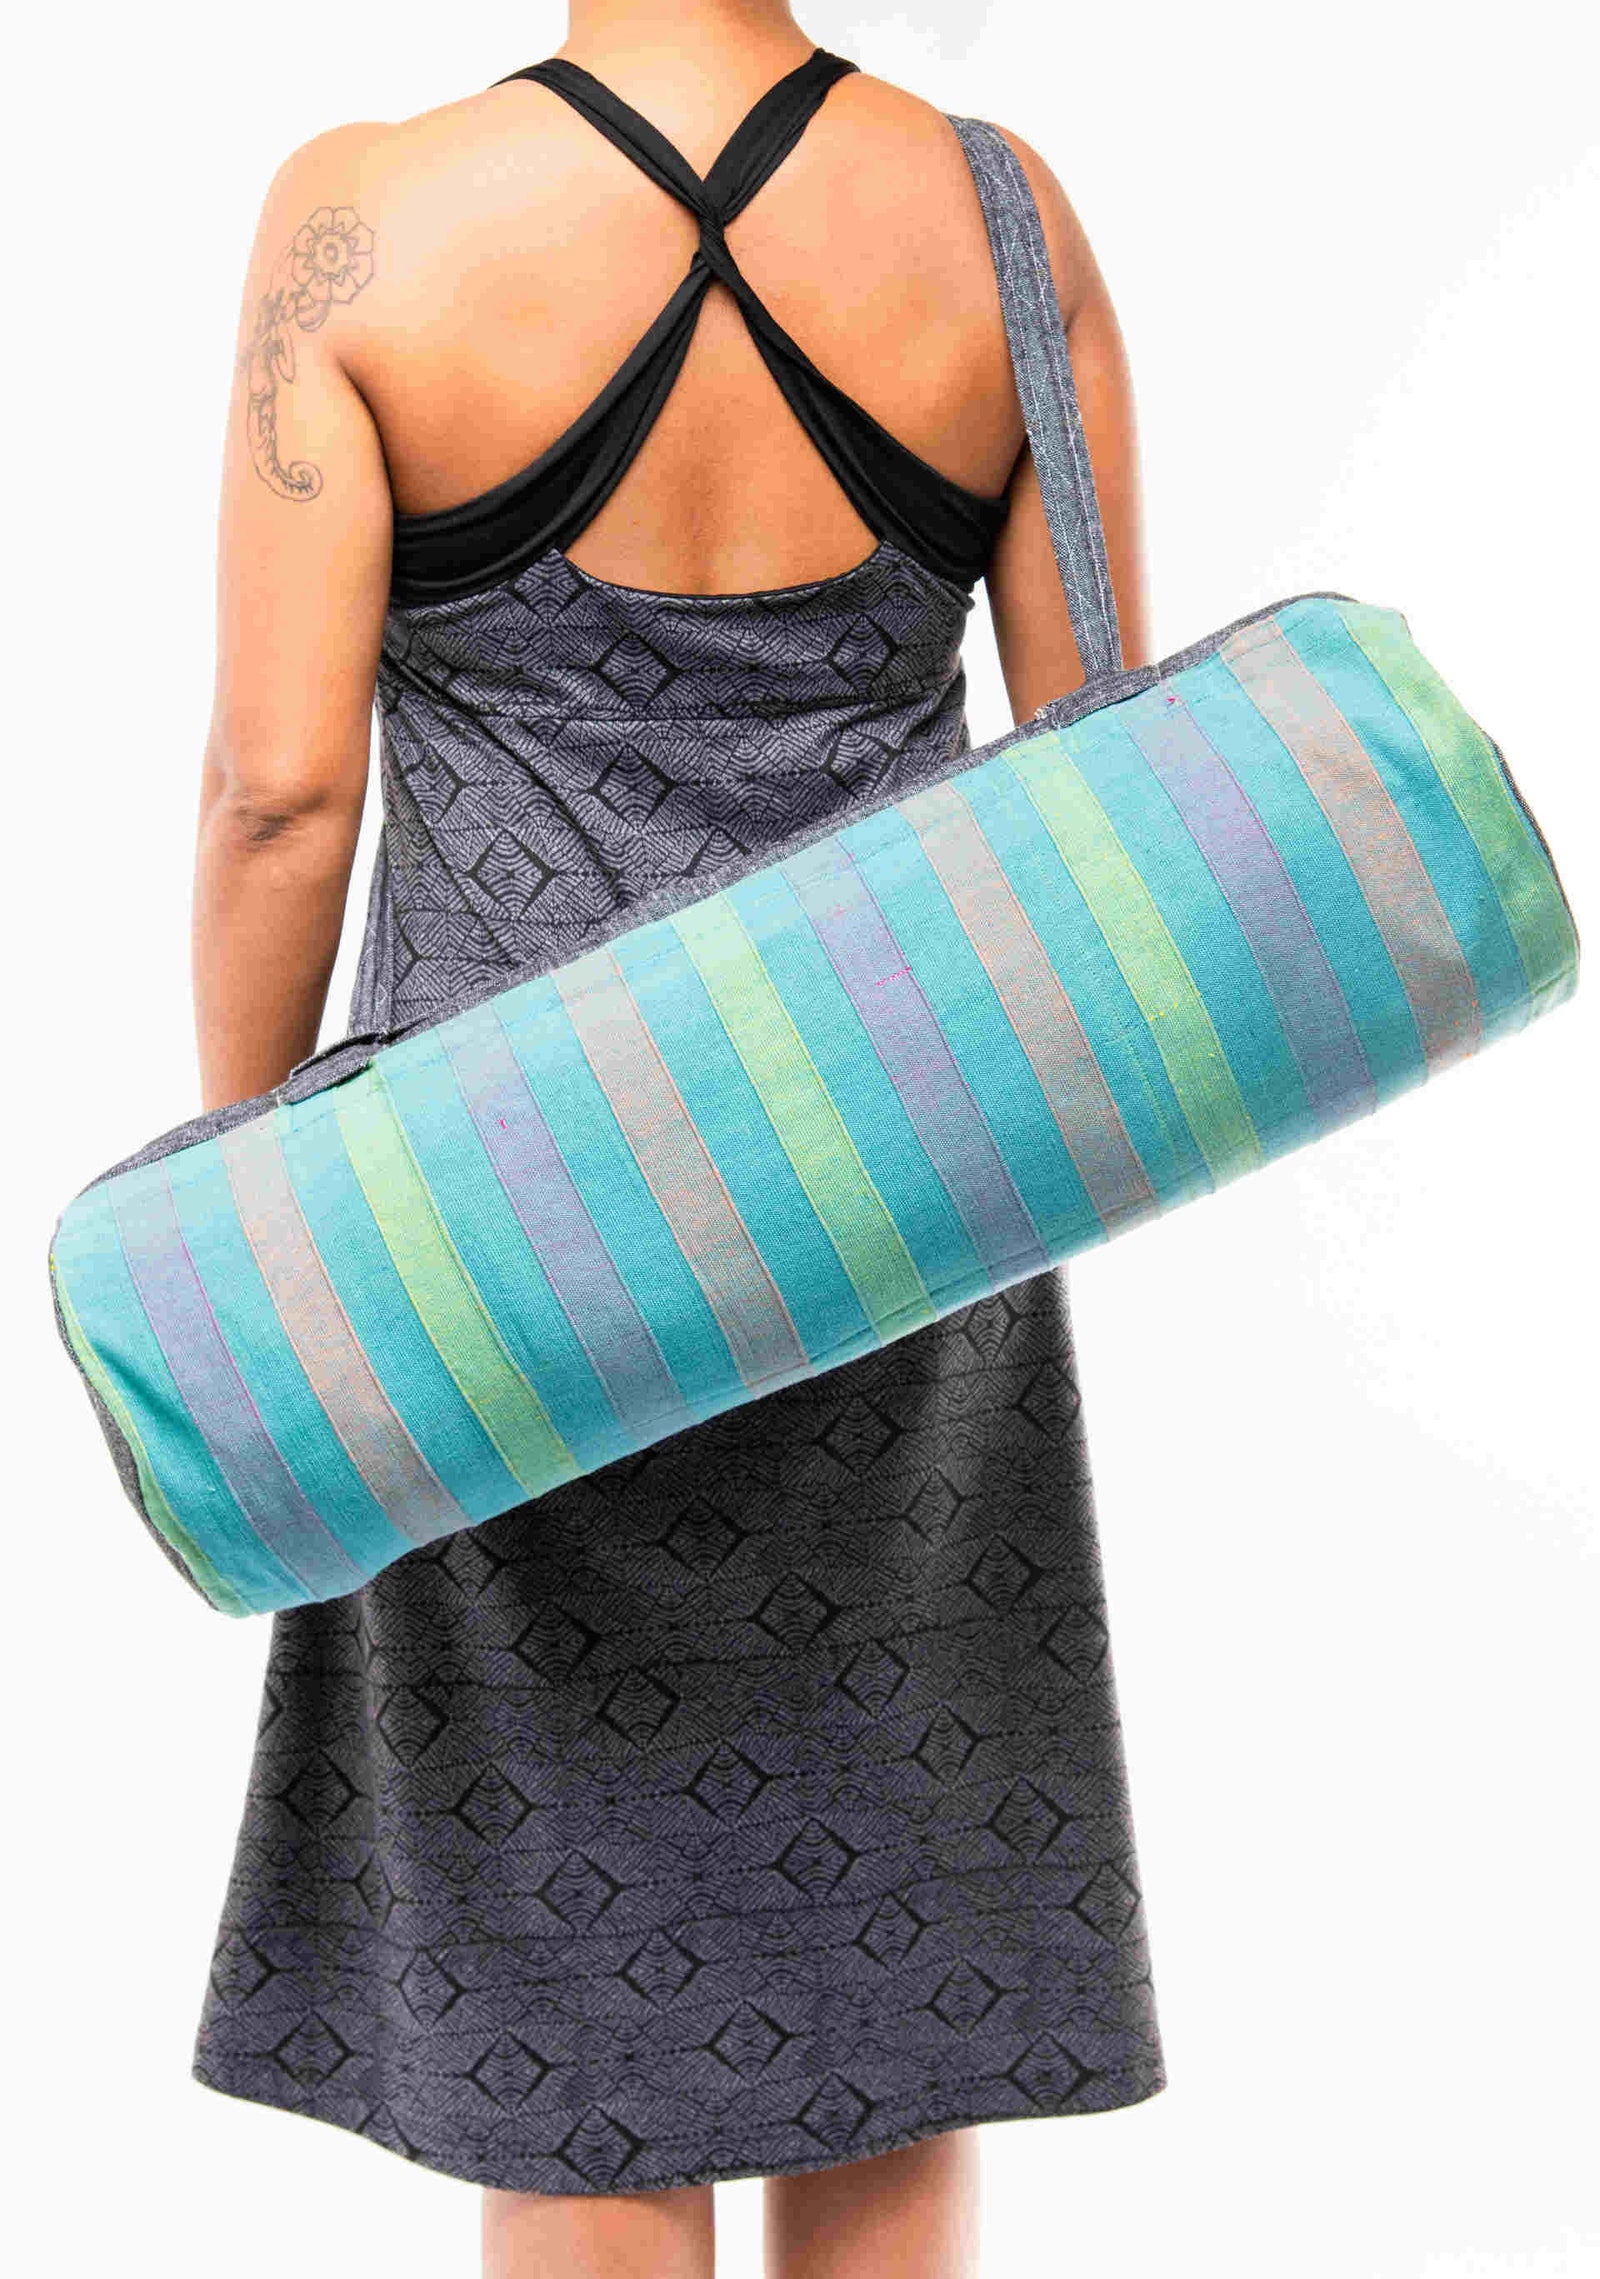 Handwoven Cotton Yoga Bags